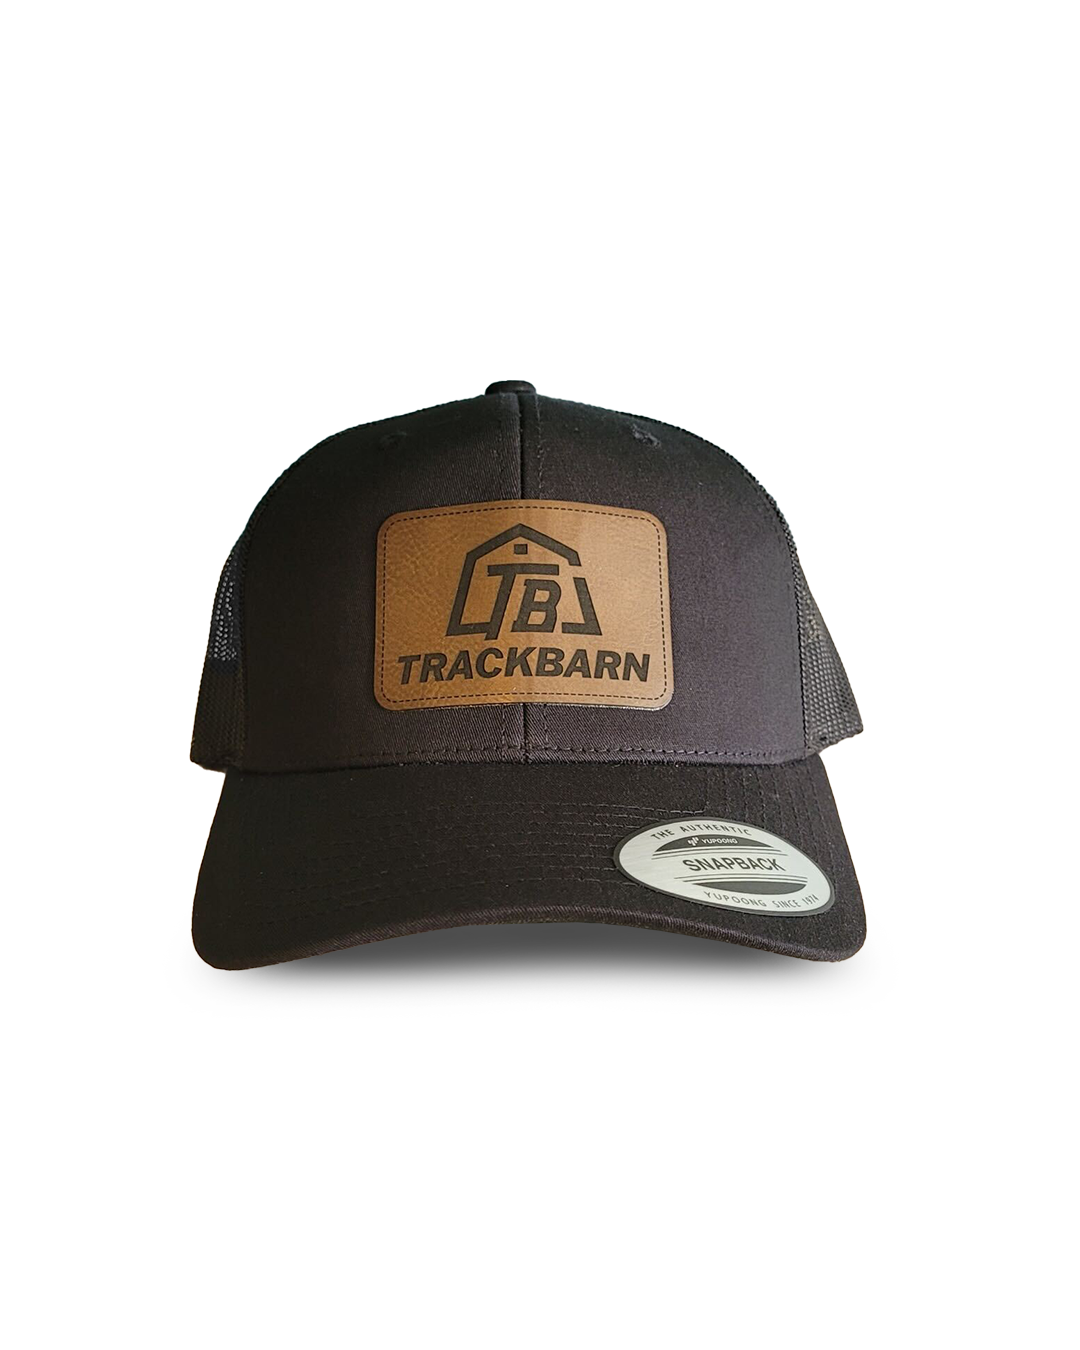 TrackBarn hat